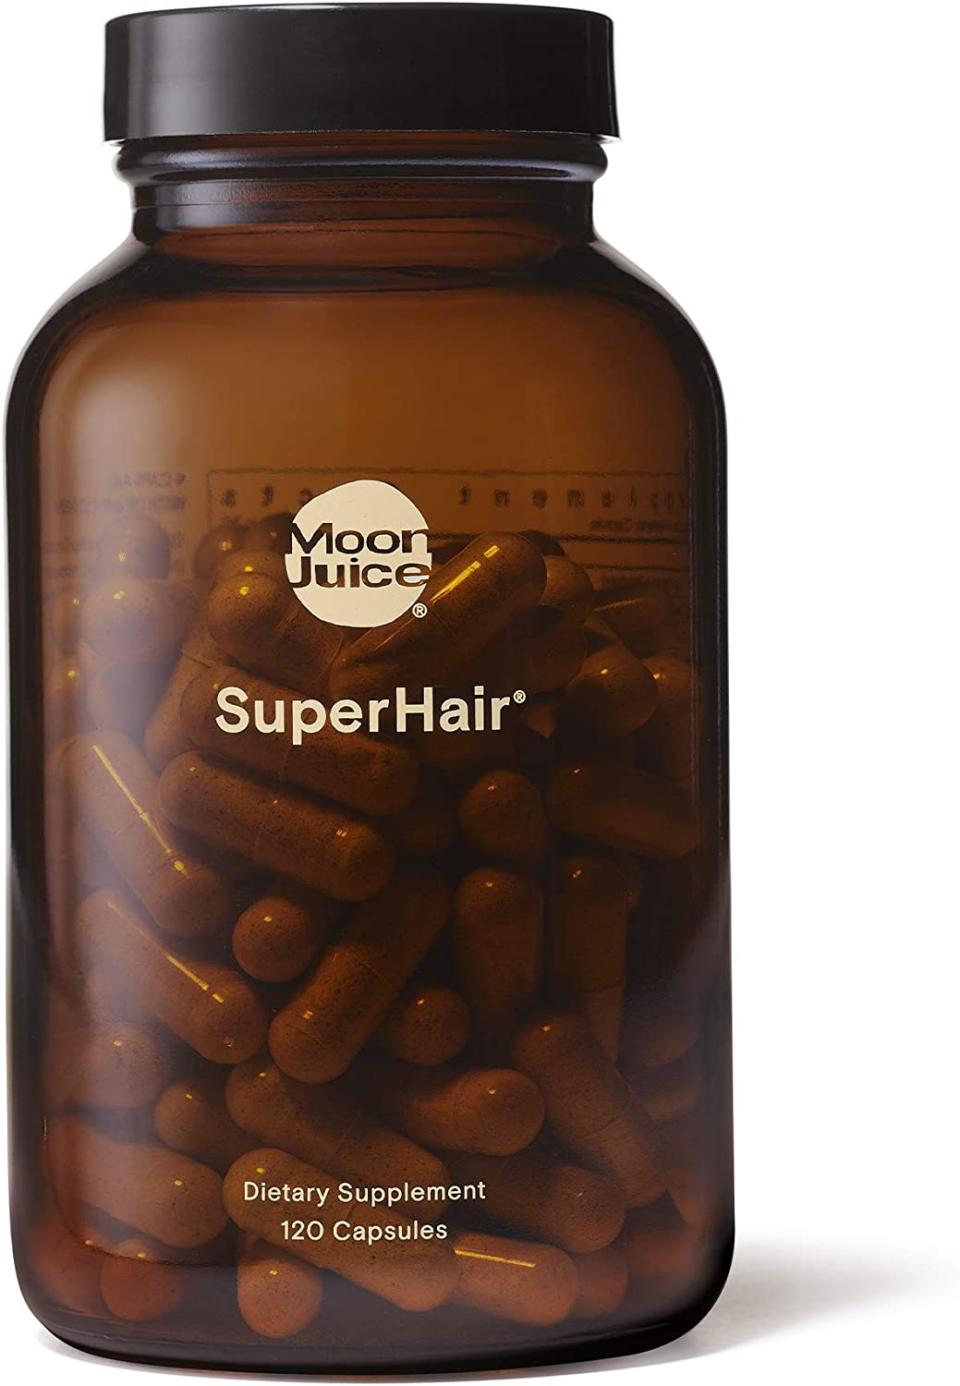 Moon Juice SuperHair Natural Hair Nutrition Supplement & Multivitamin